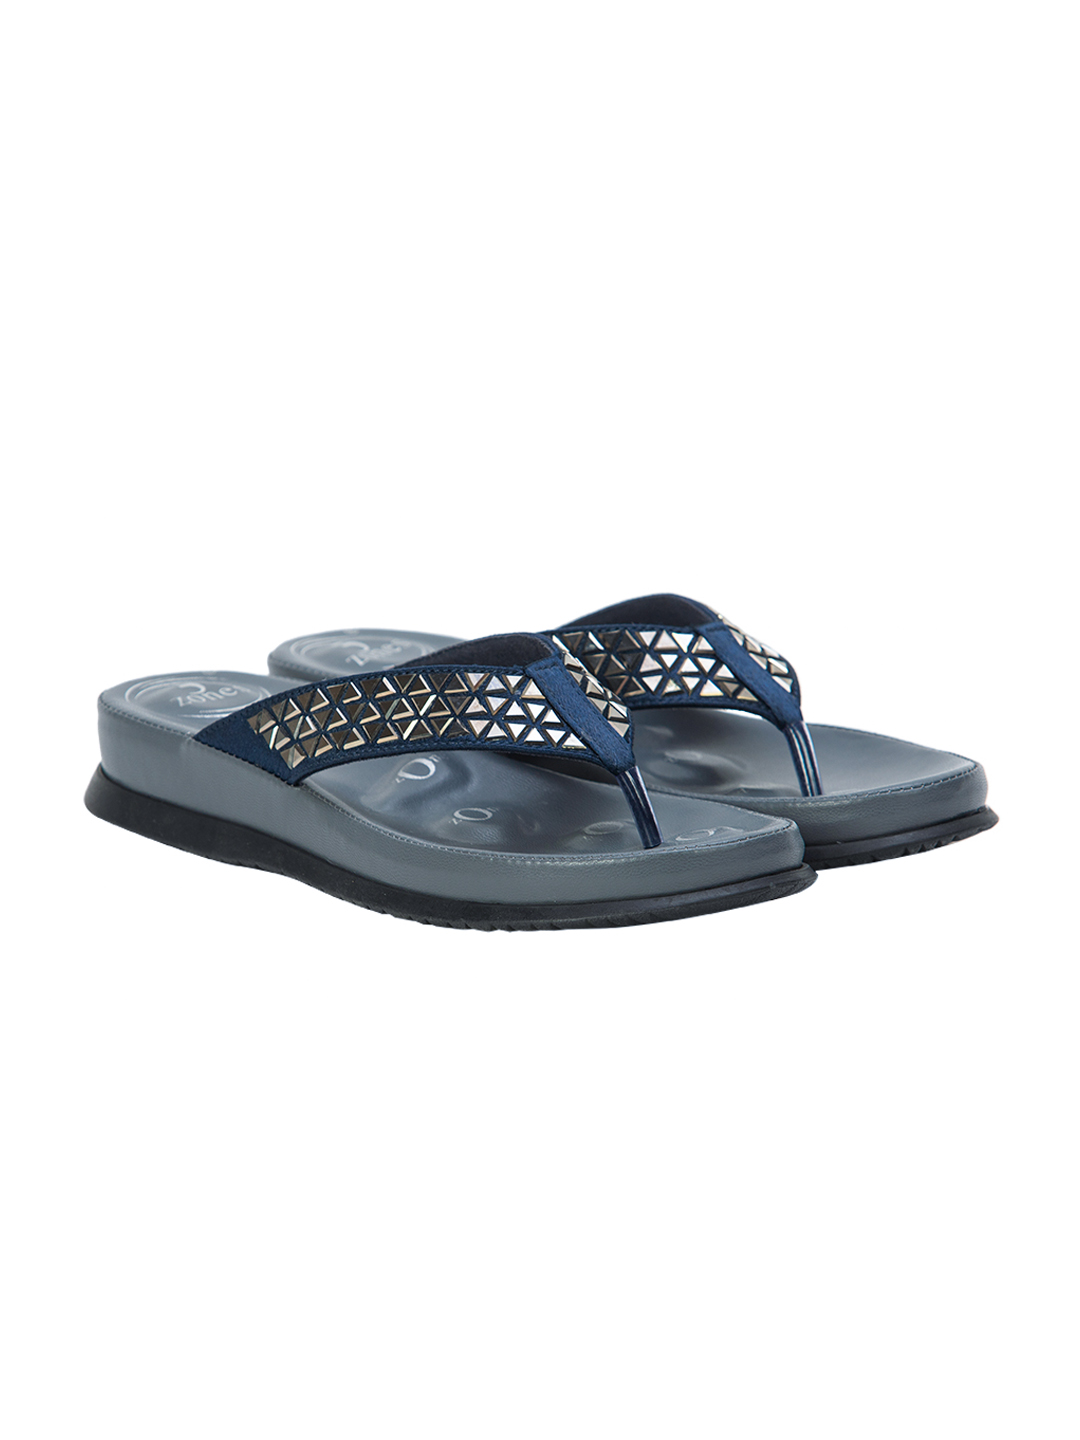 Buy Von Wellx Germany Comfort Beam Blue Slippers Online in Lucknow